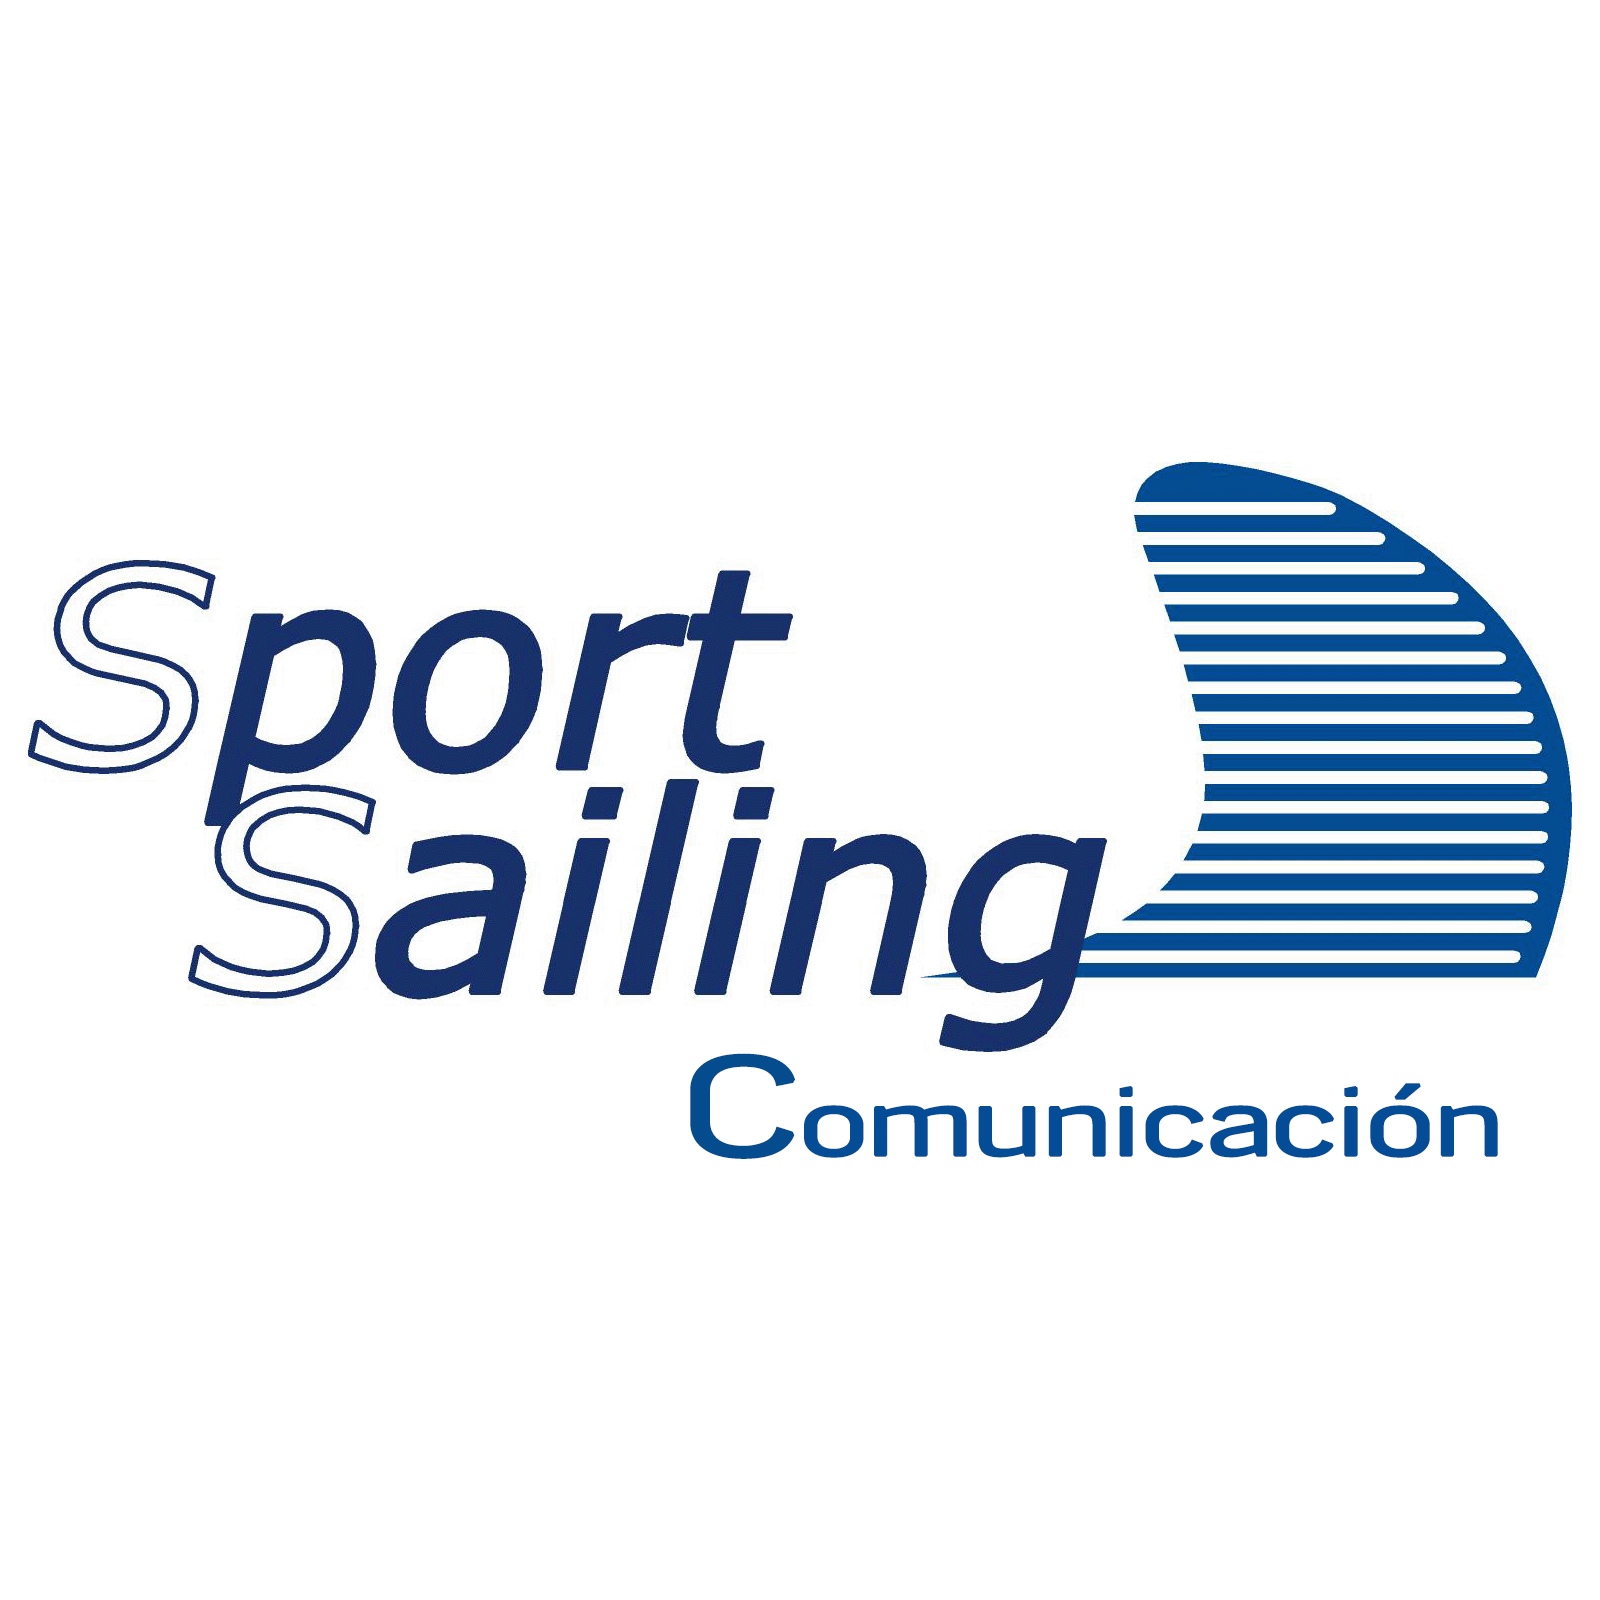 Sport Sailing